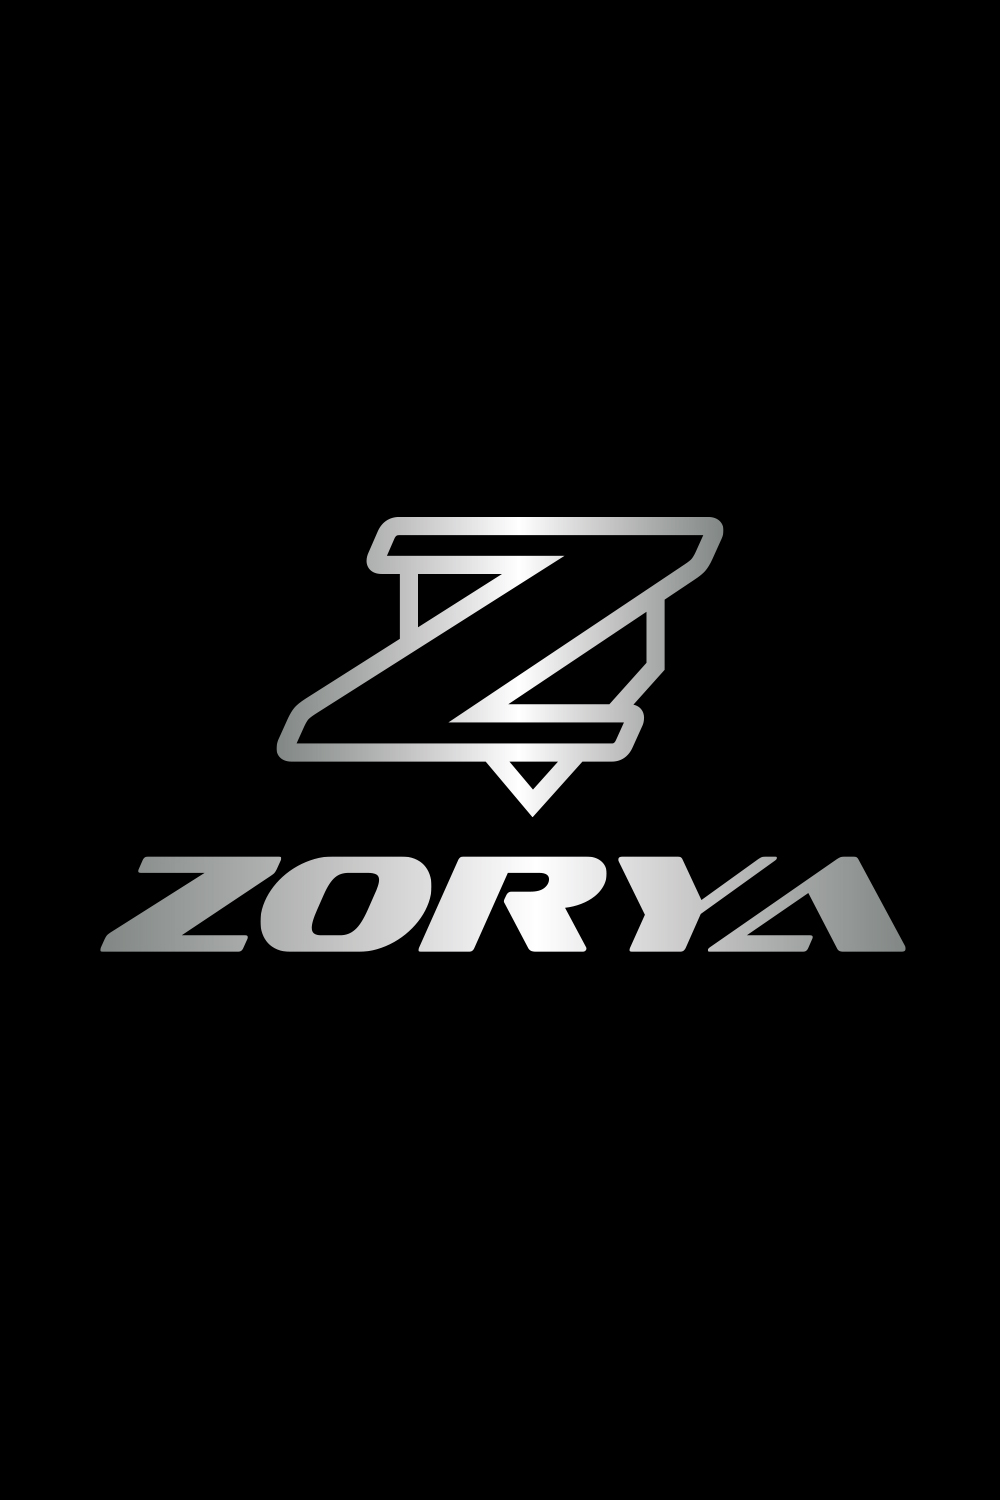 Letter Z ( Royal type ) geometrical logo design pinterest preview image.